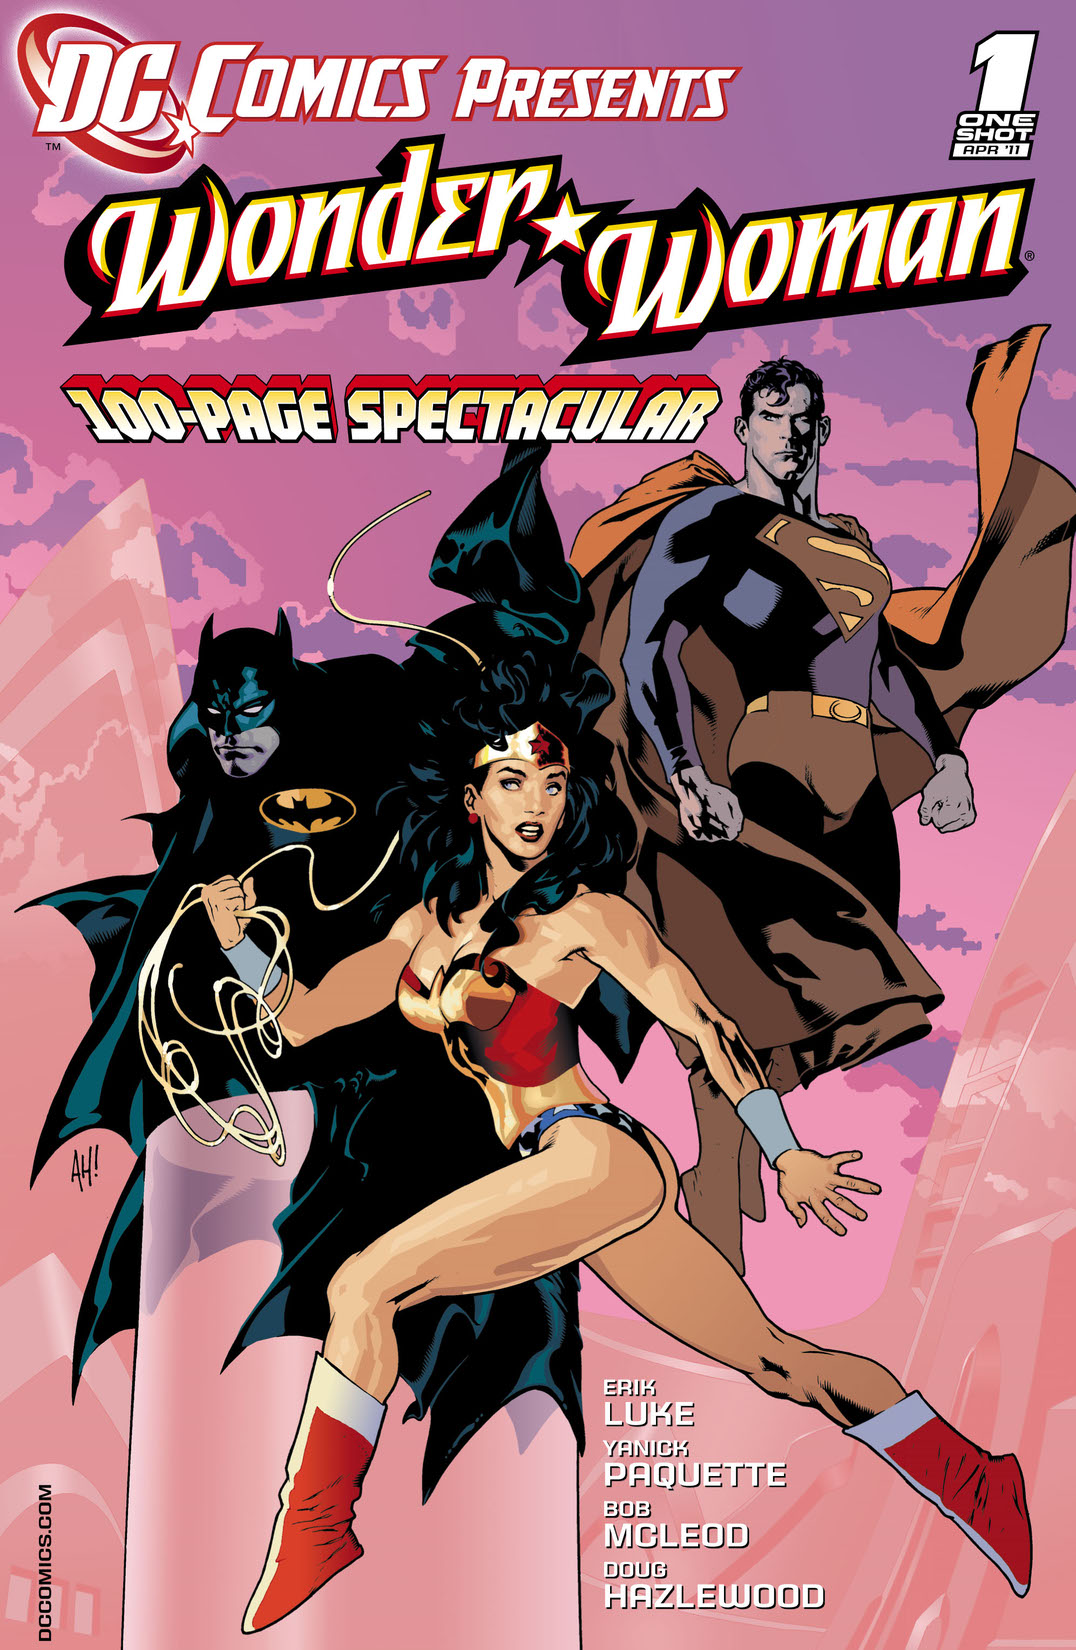 DC Comics Presents: Wonder Woman (2011-) #1 preview images